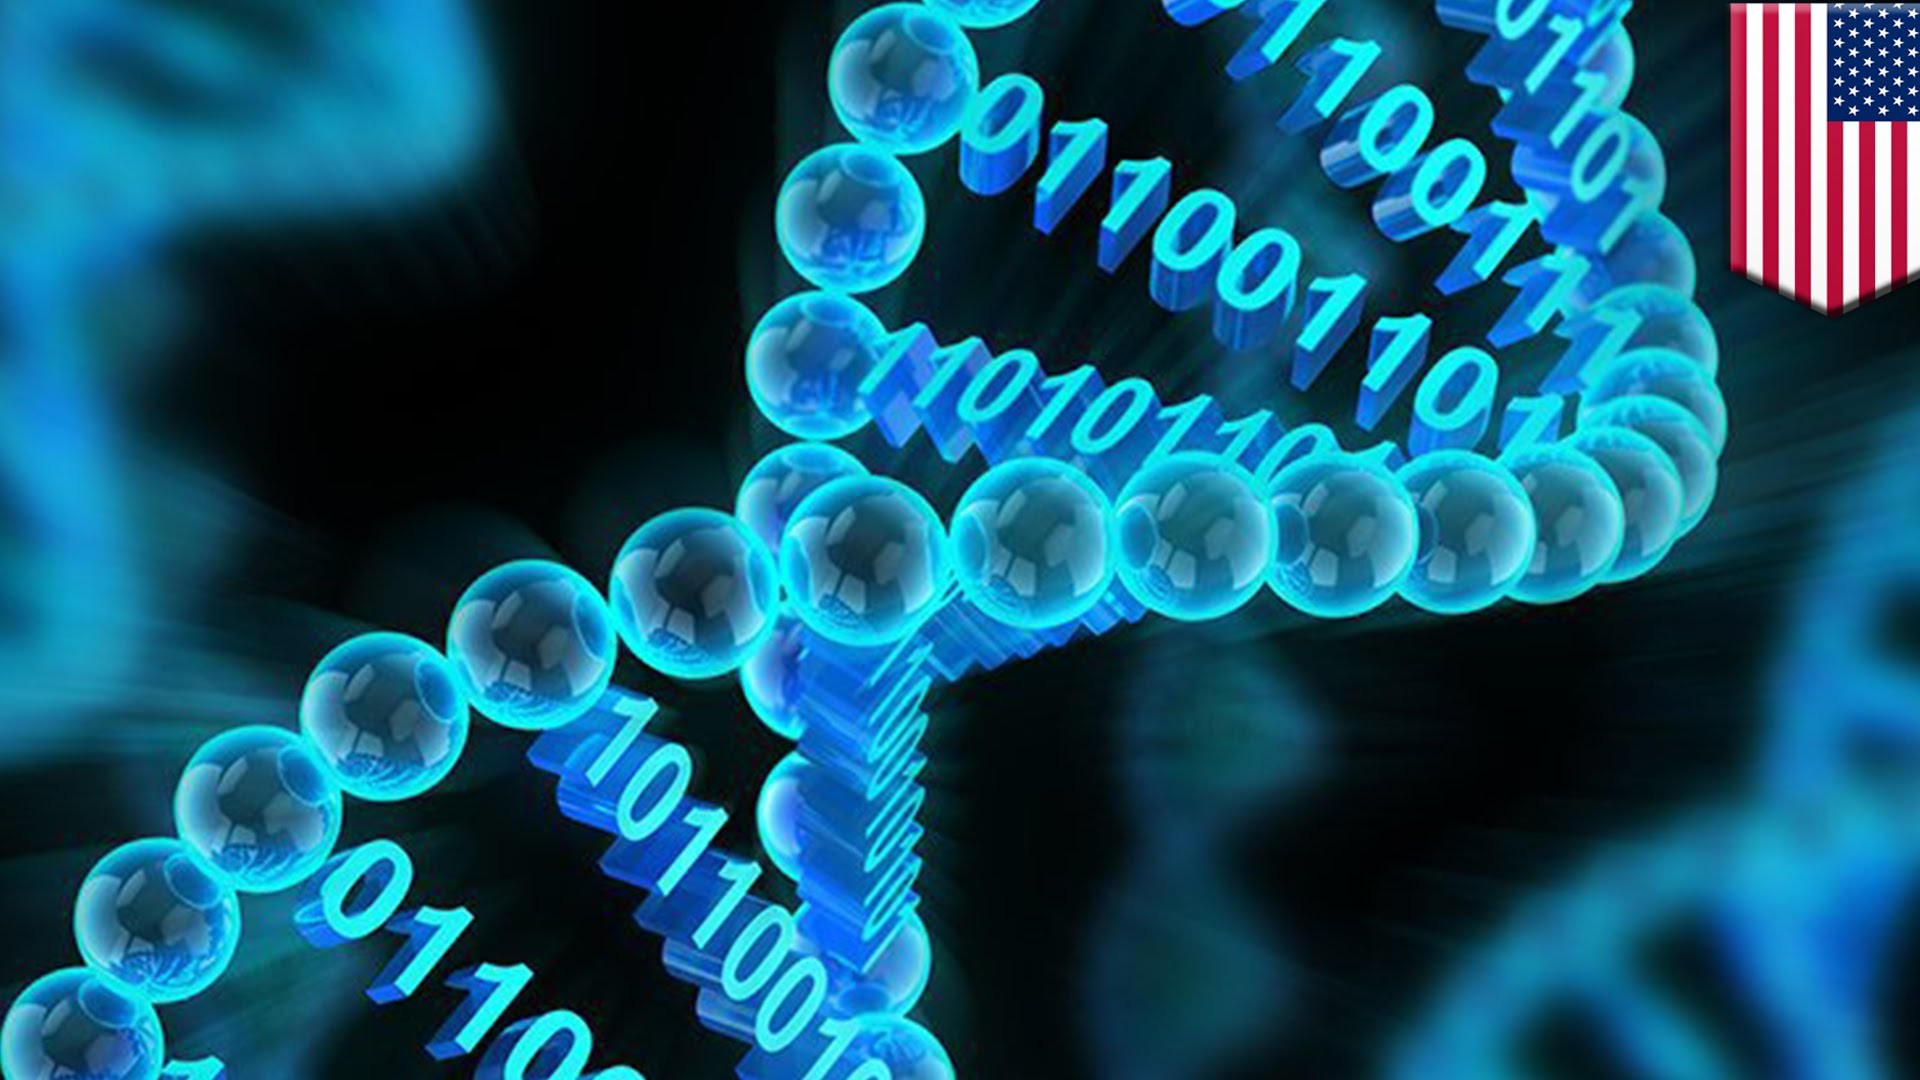 1920x1080 Data storage: Microsoft planning to use DNA to store digital data - TomoNews